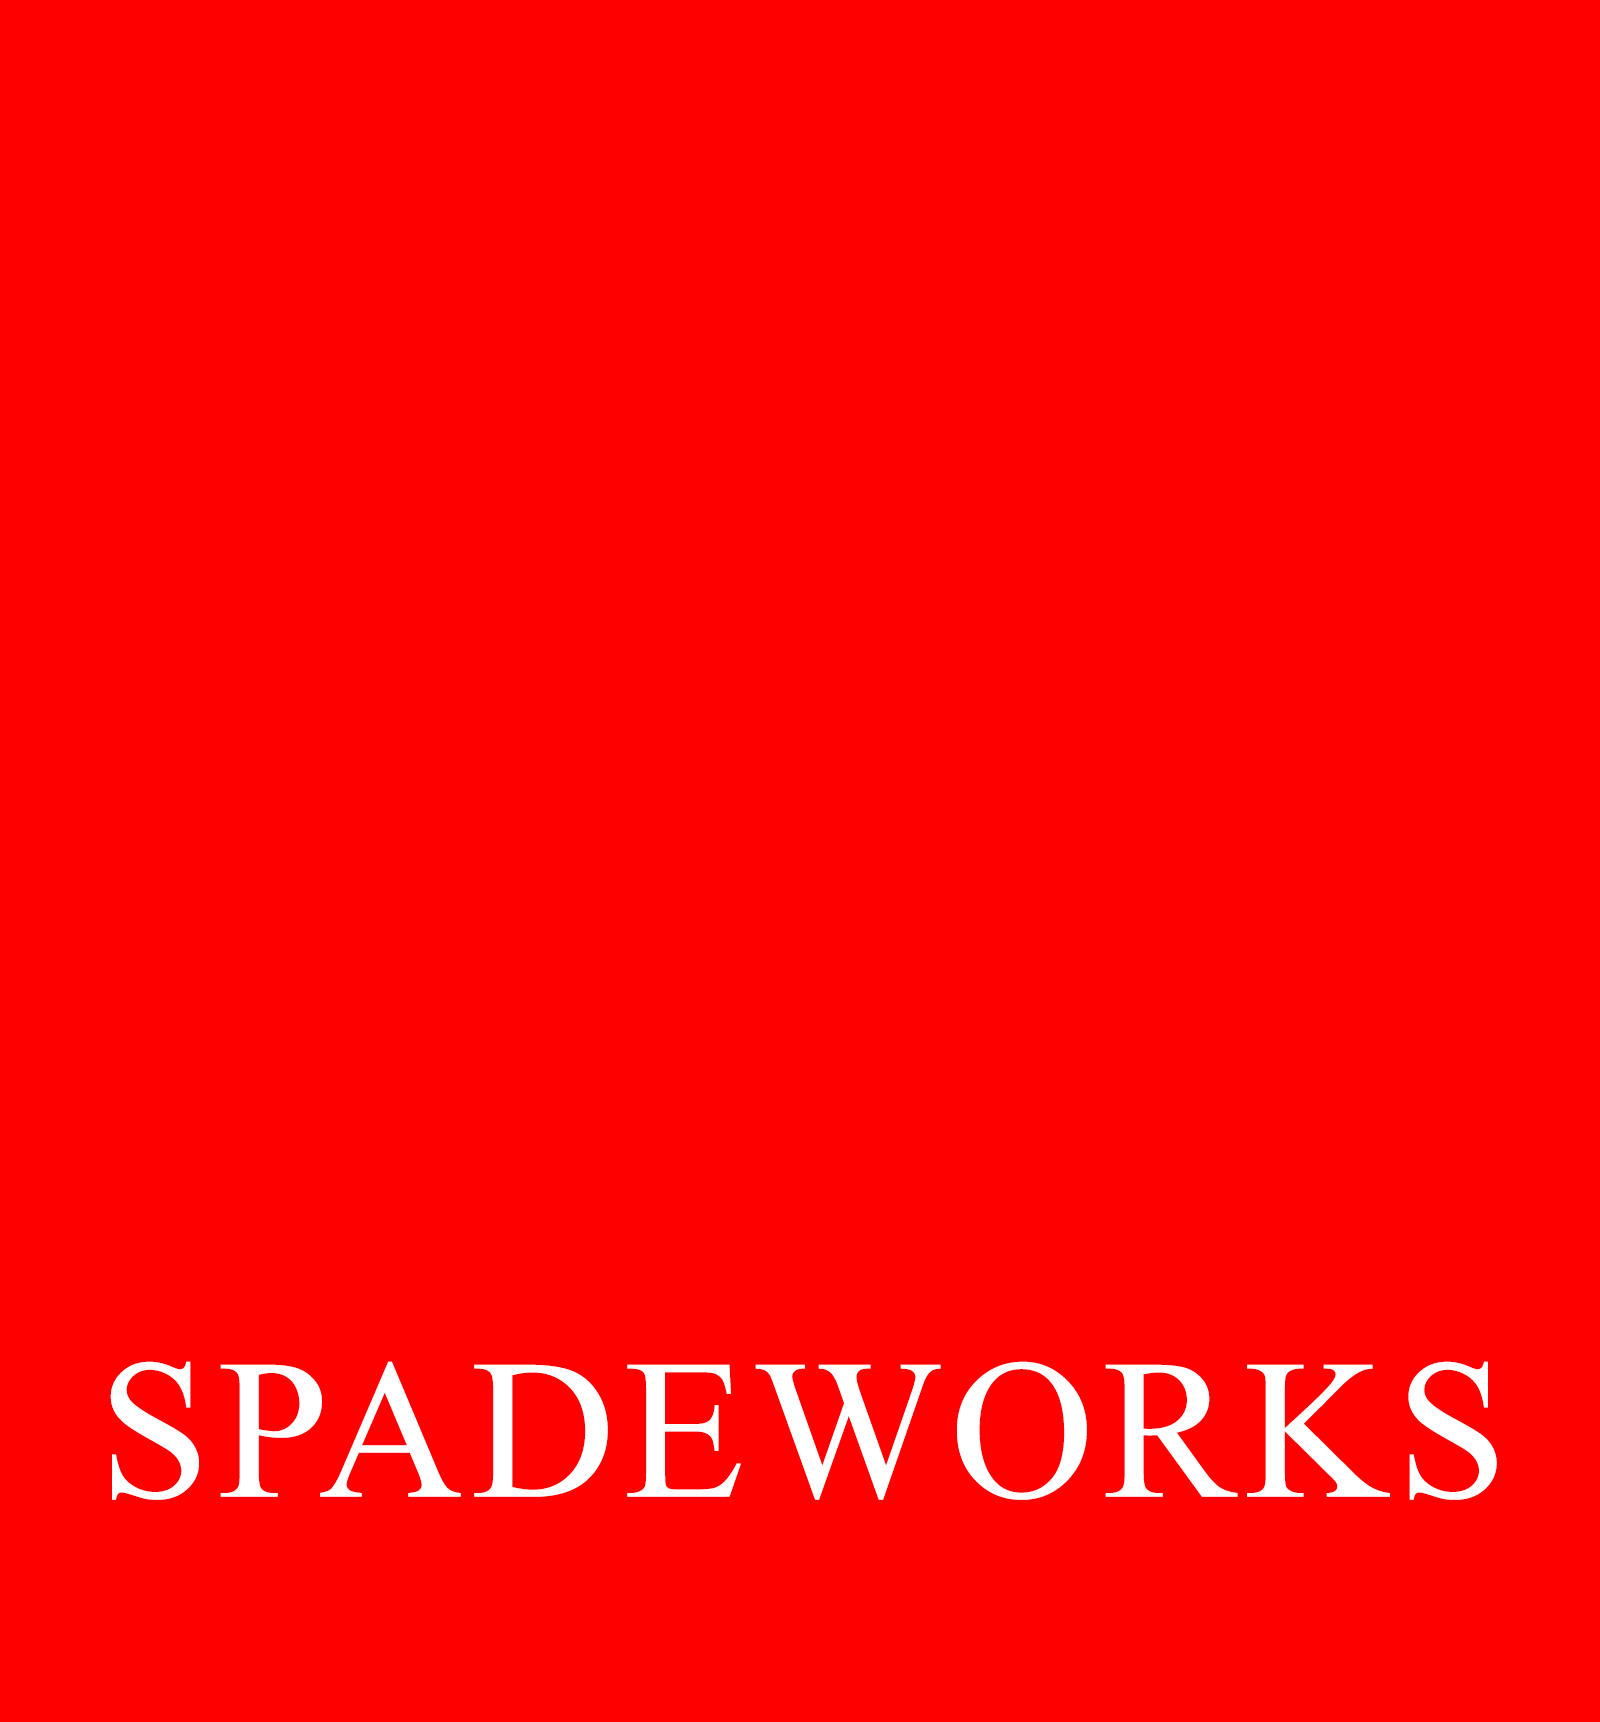 Spadeworks